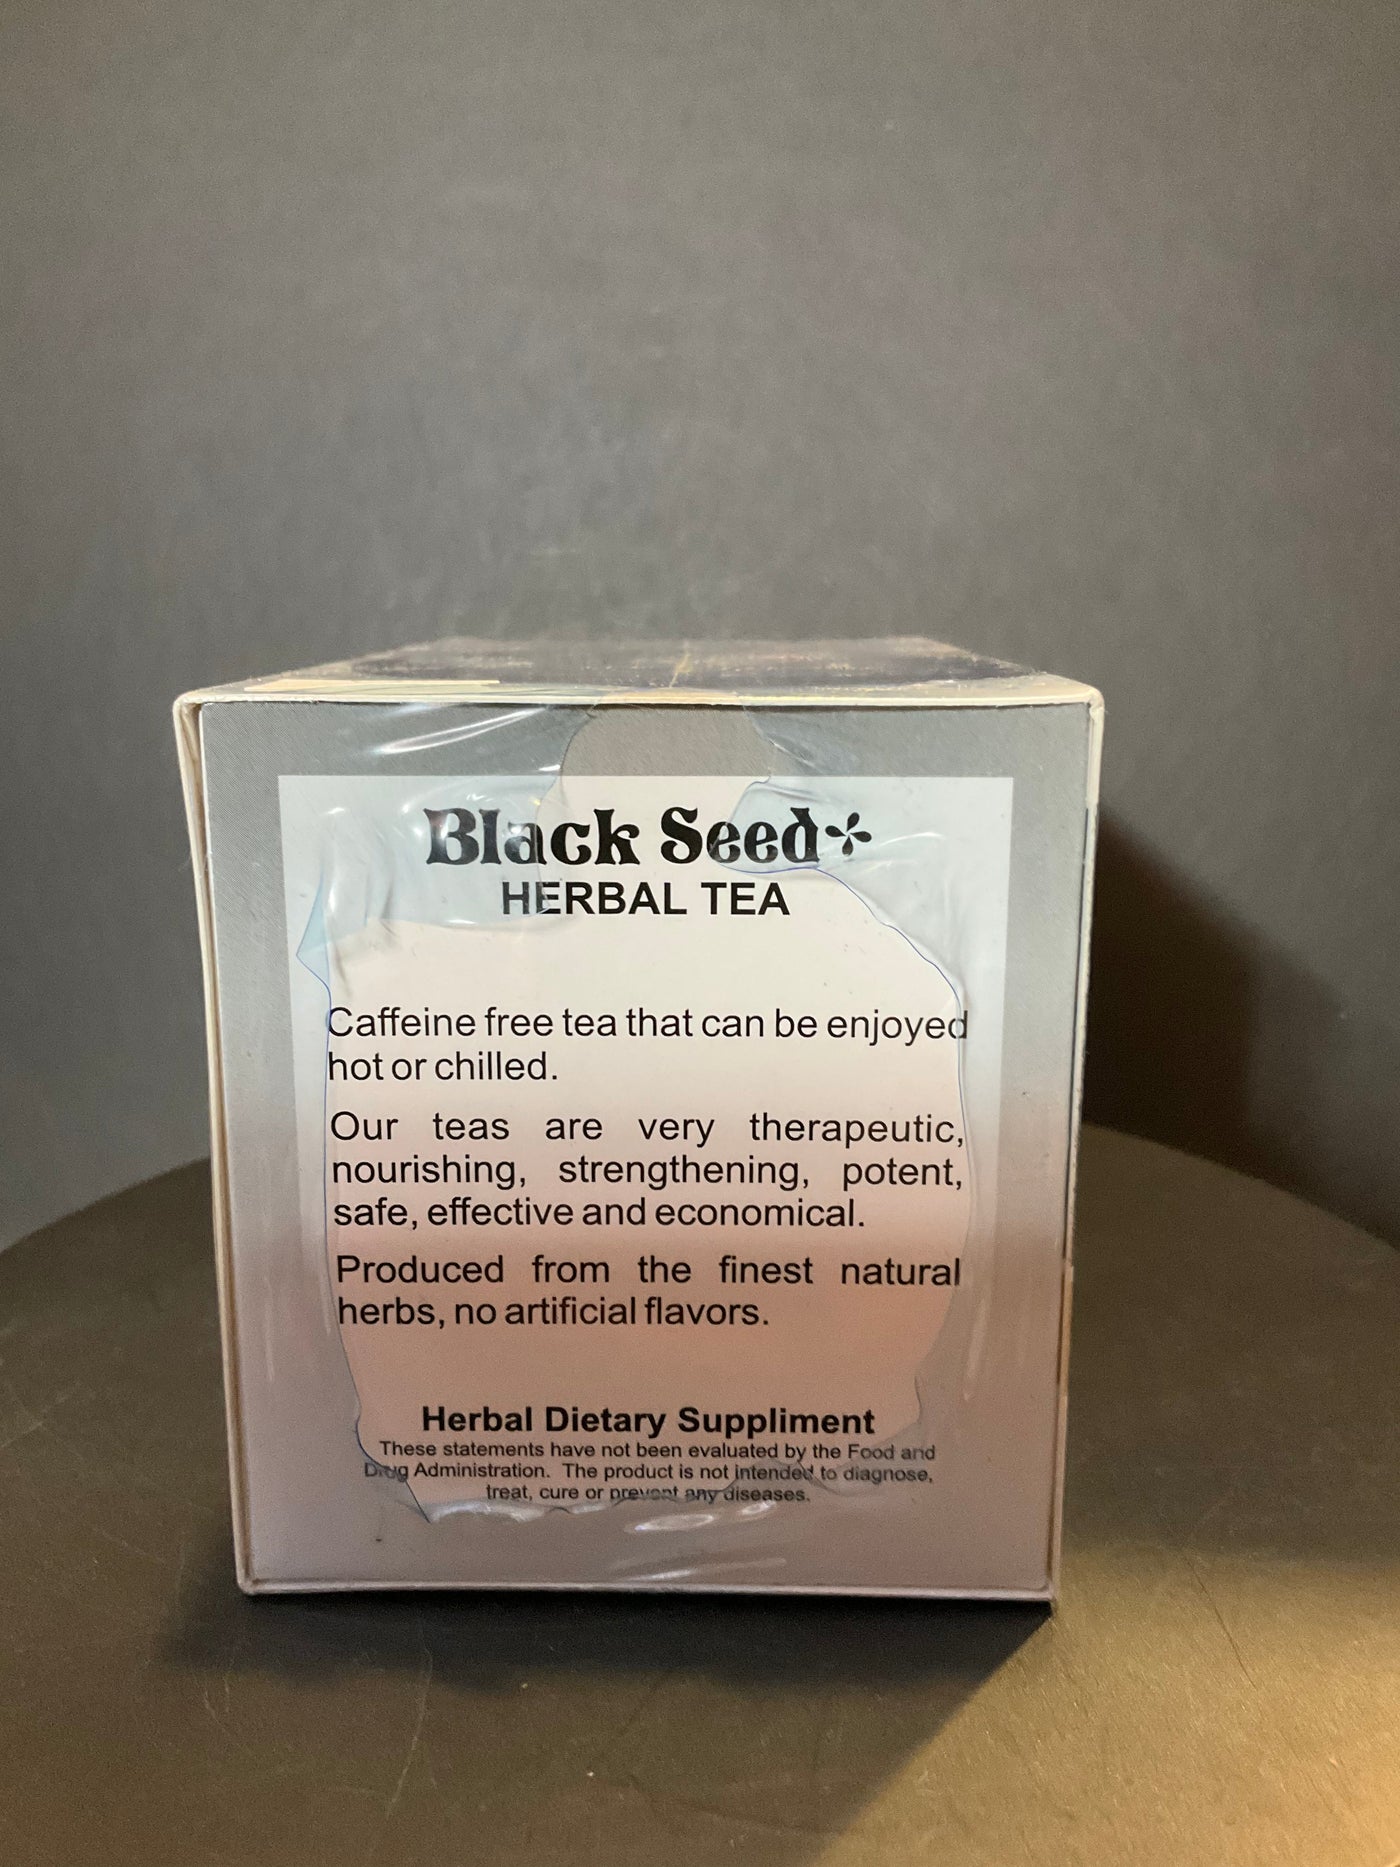 Herboganic Herbal Tea (Wholesale)